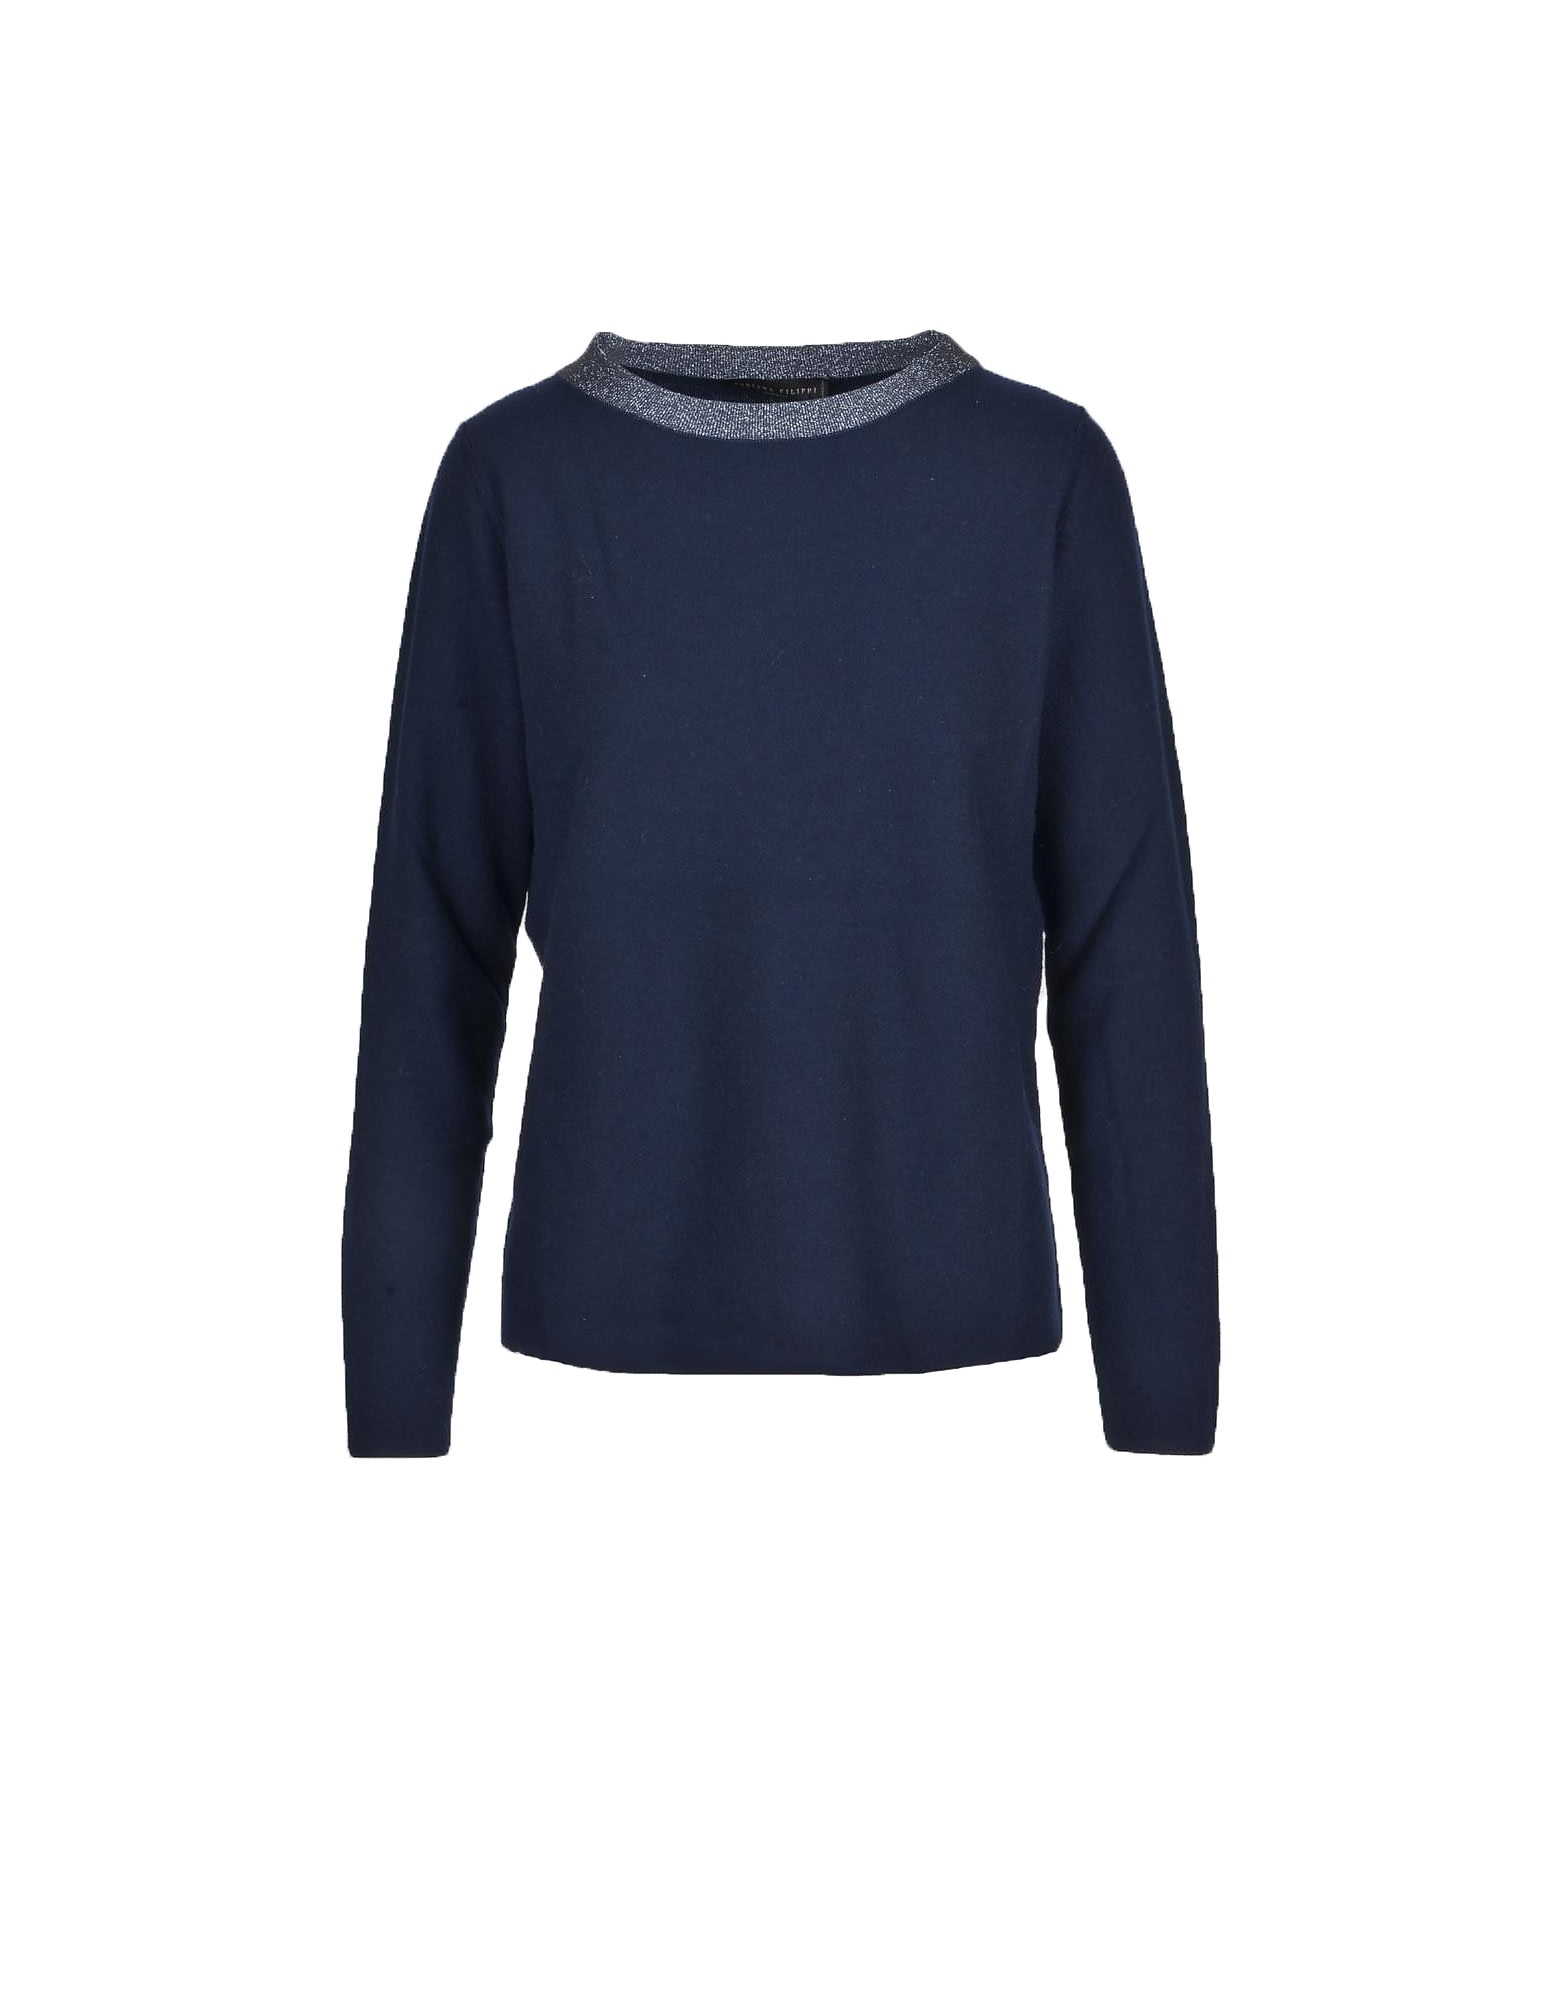 Fabiana Filippi Womens Blue Sweater